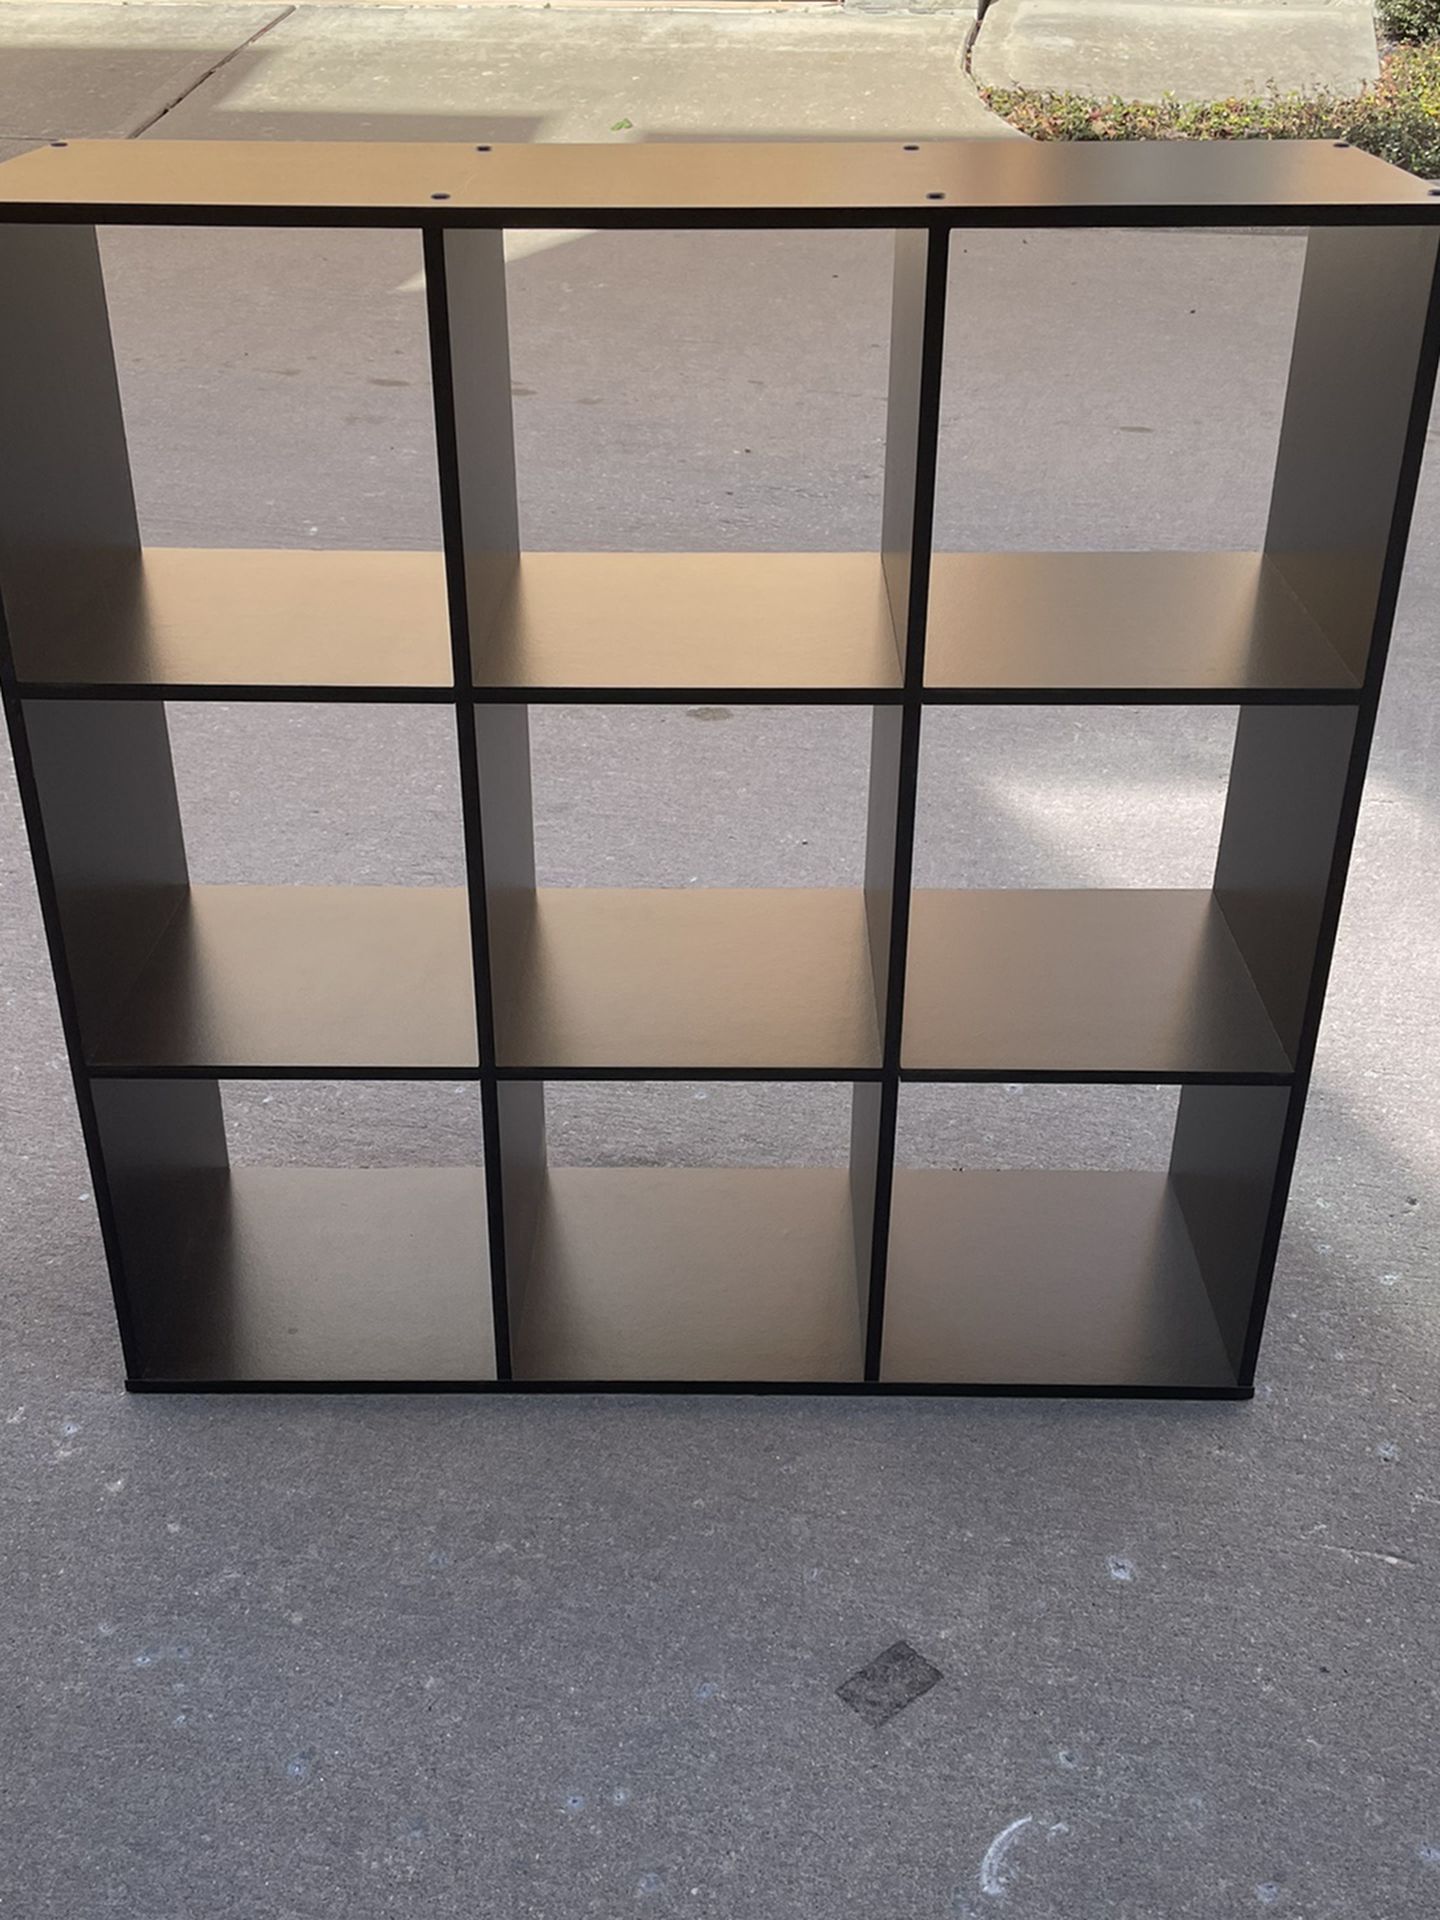 9 Compartment Storage Cube